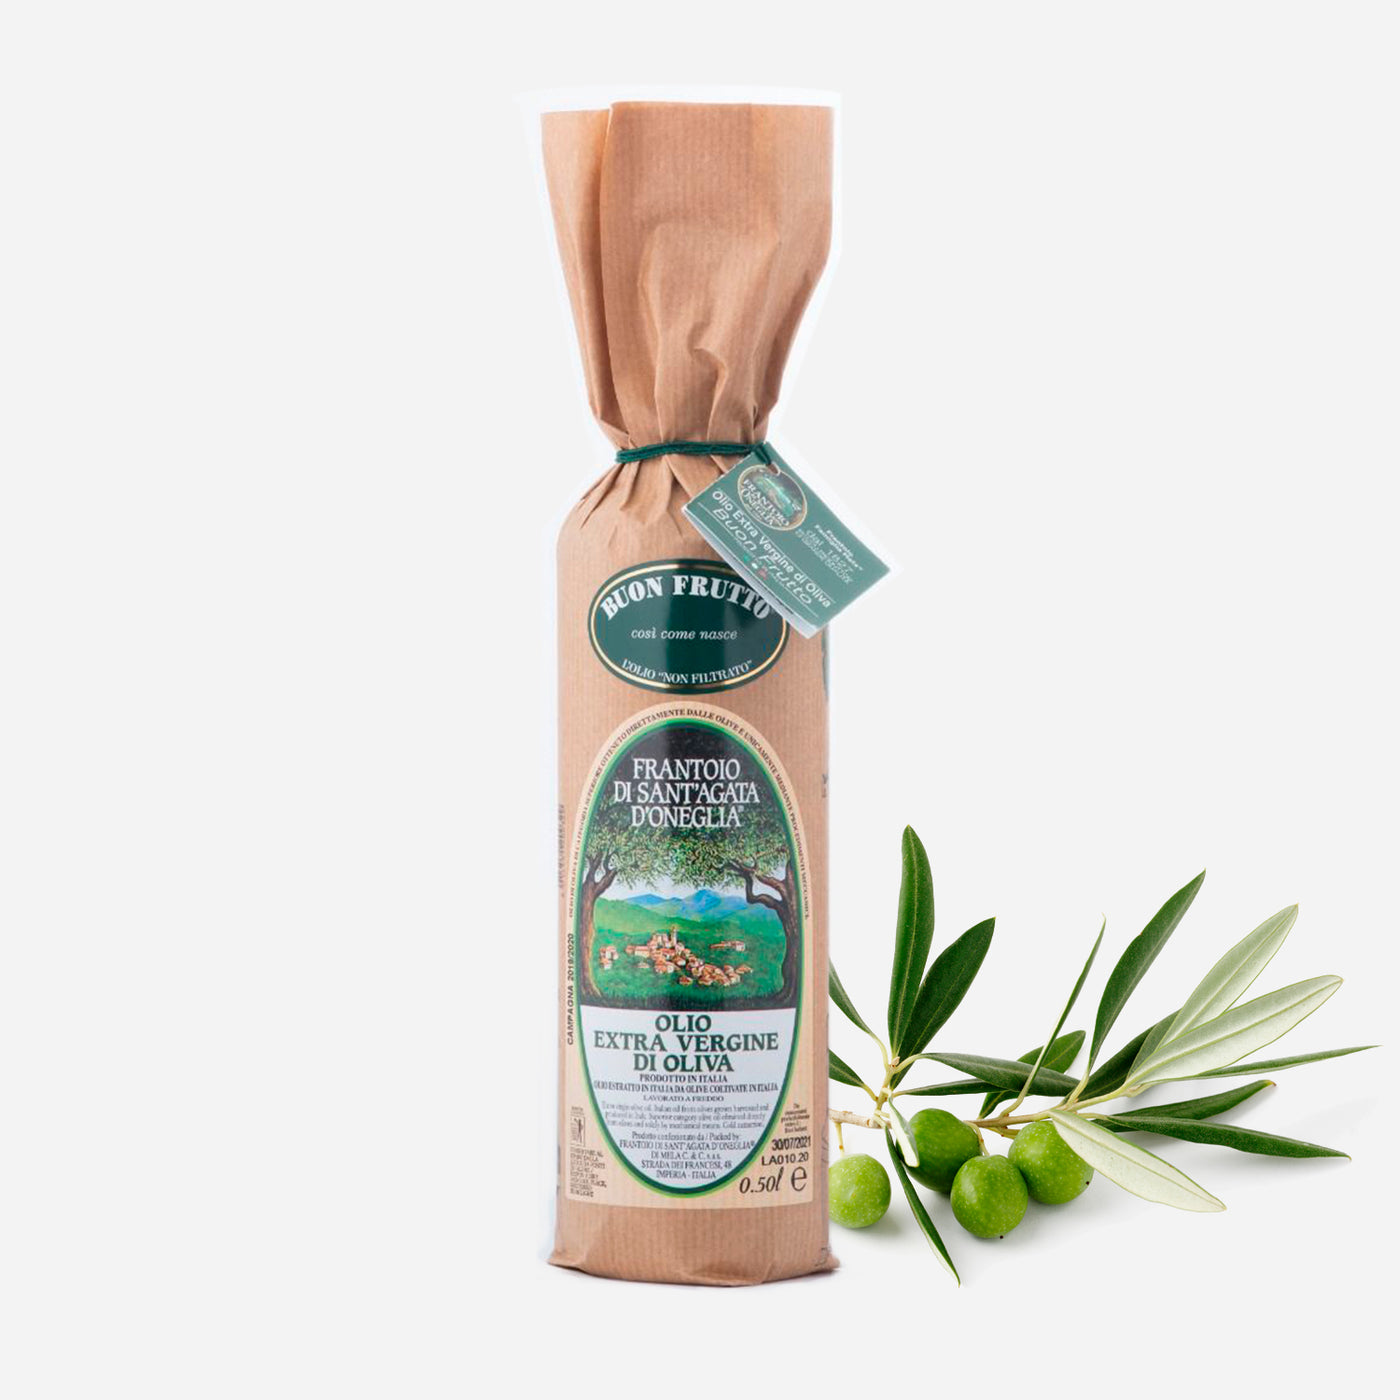 'Buon Frutto' - Ligurian Extra Virgin Olive oil